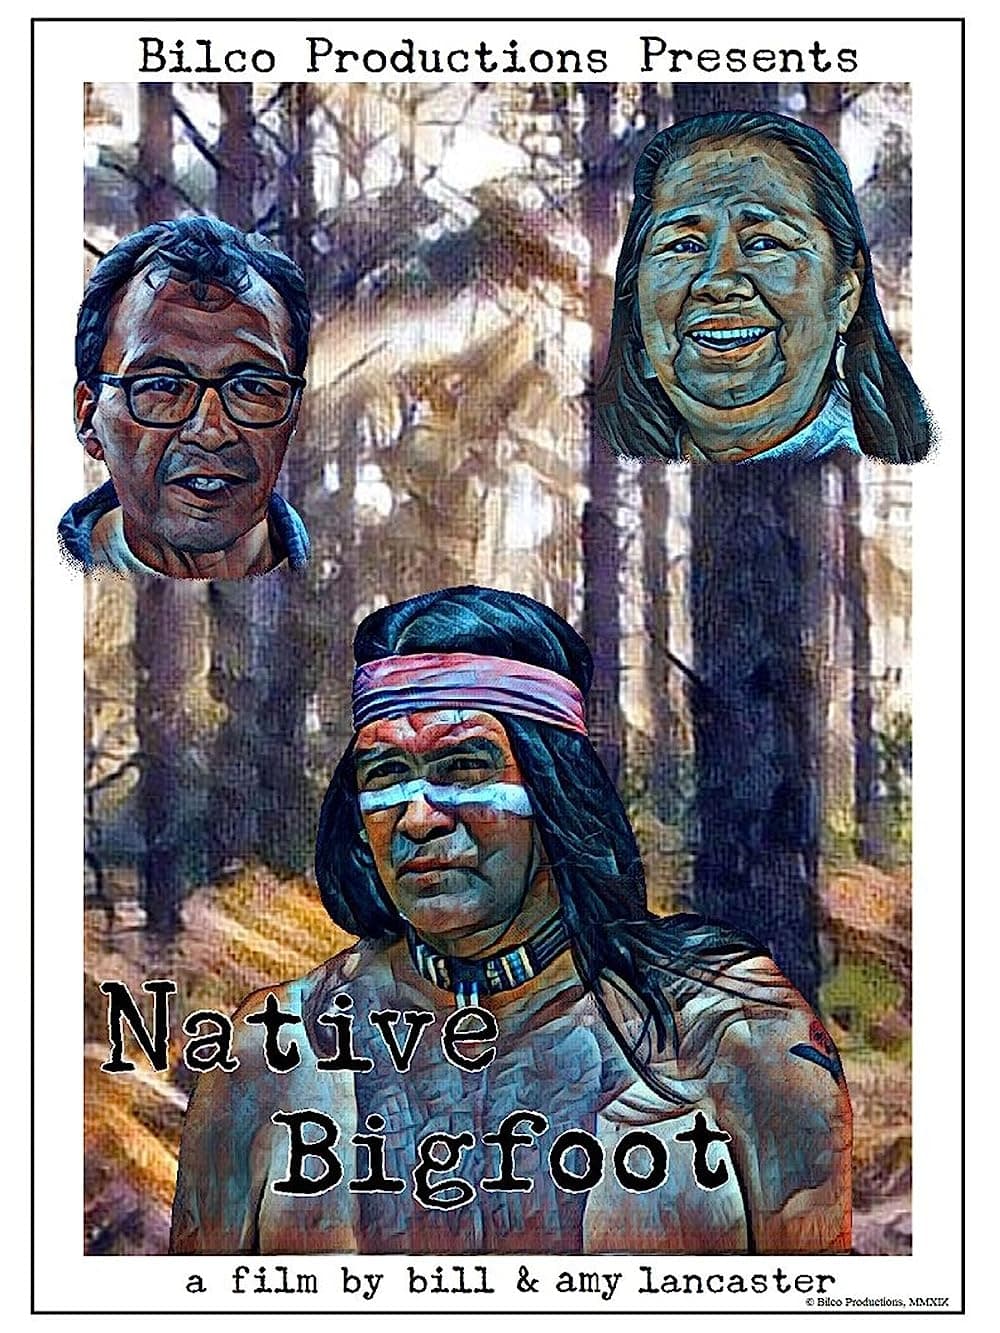 Native Bigfoot